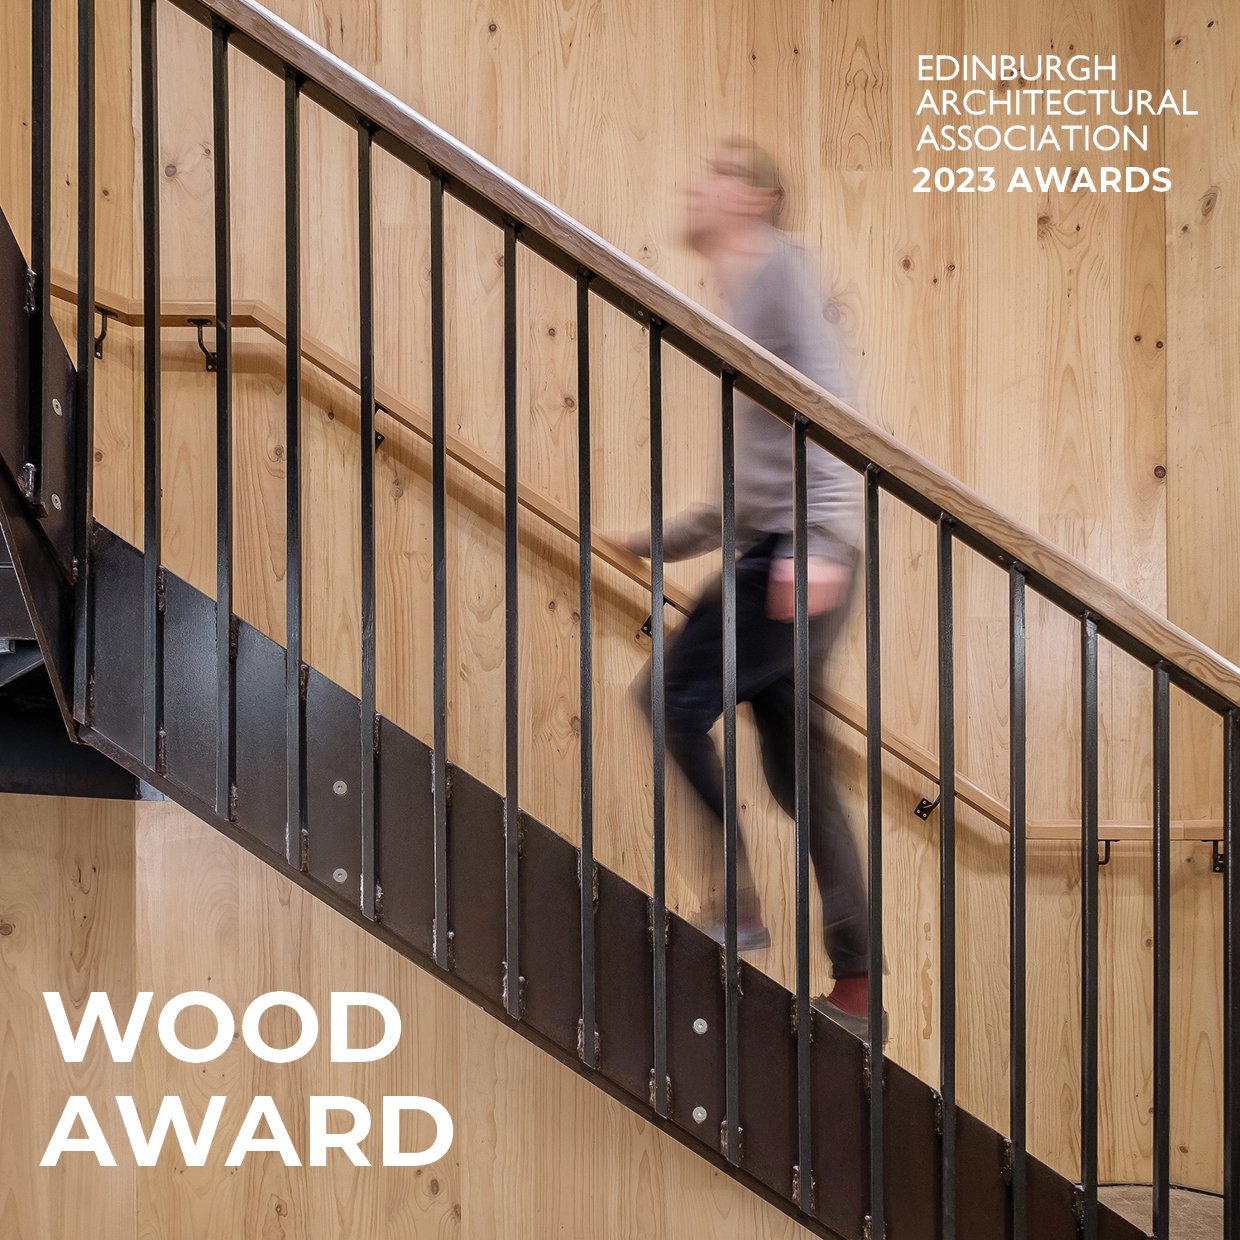 EAA-edinburgh-architectural-association-awards-2023-categories-announced11.jpg